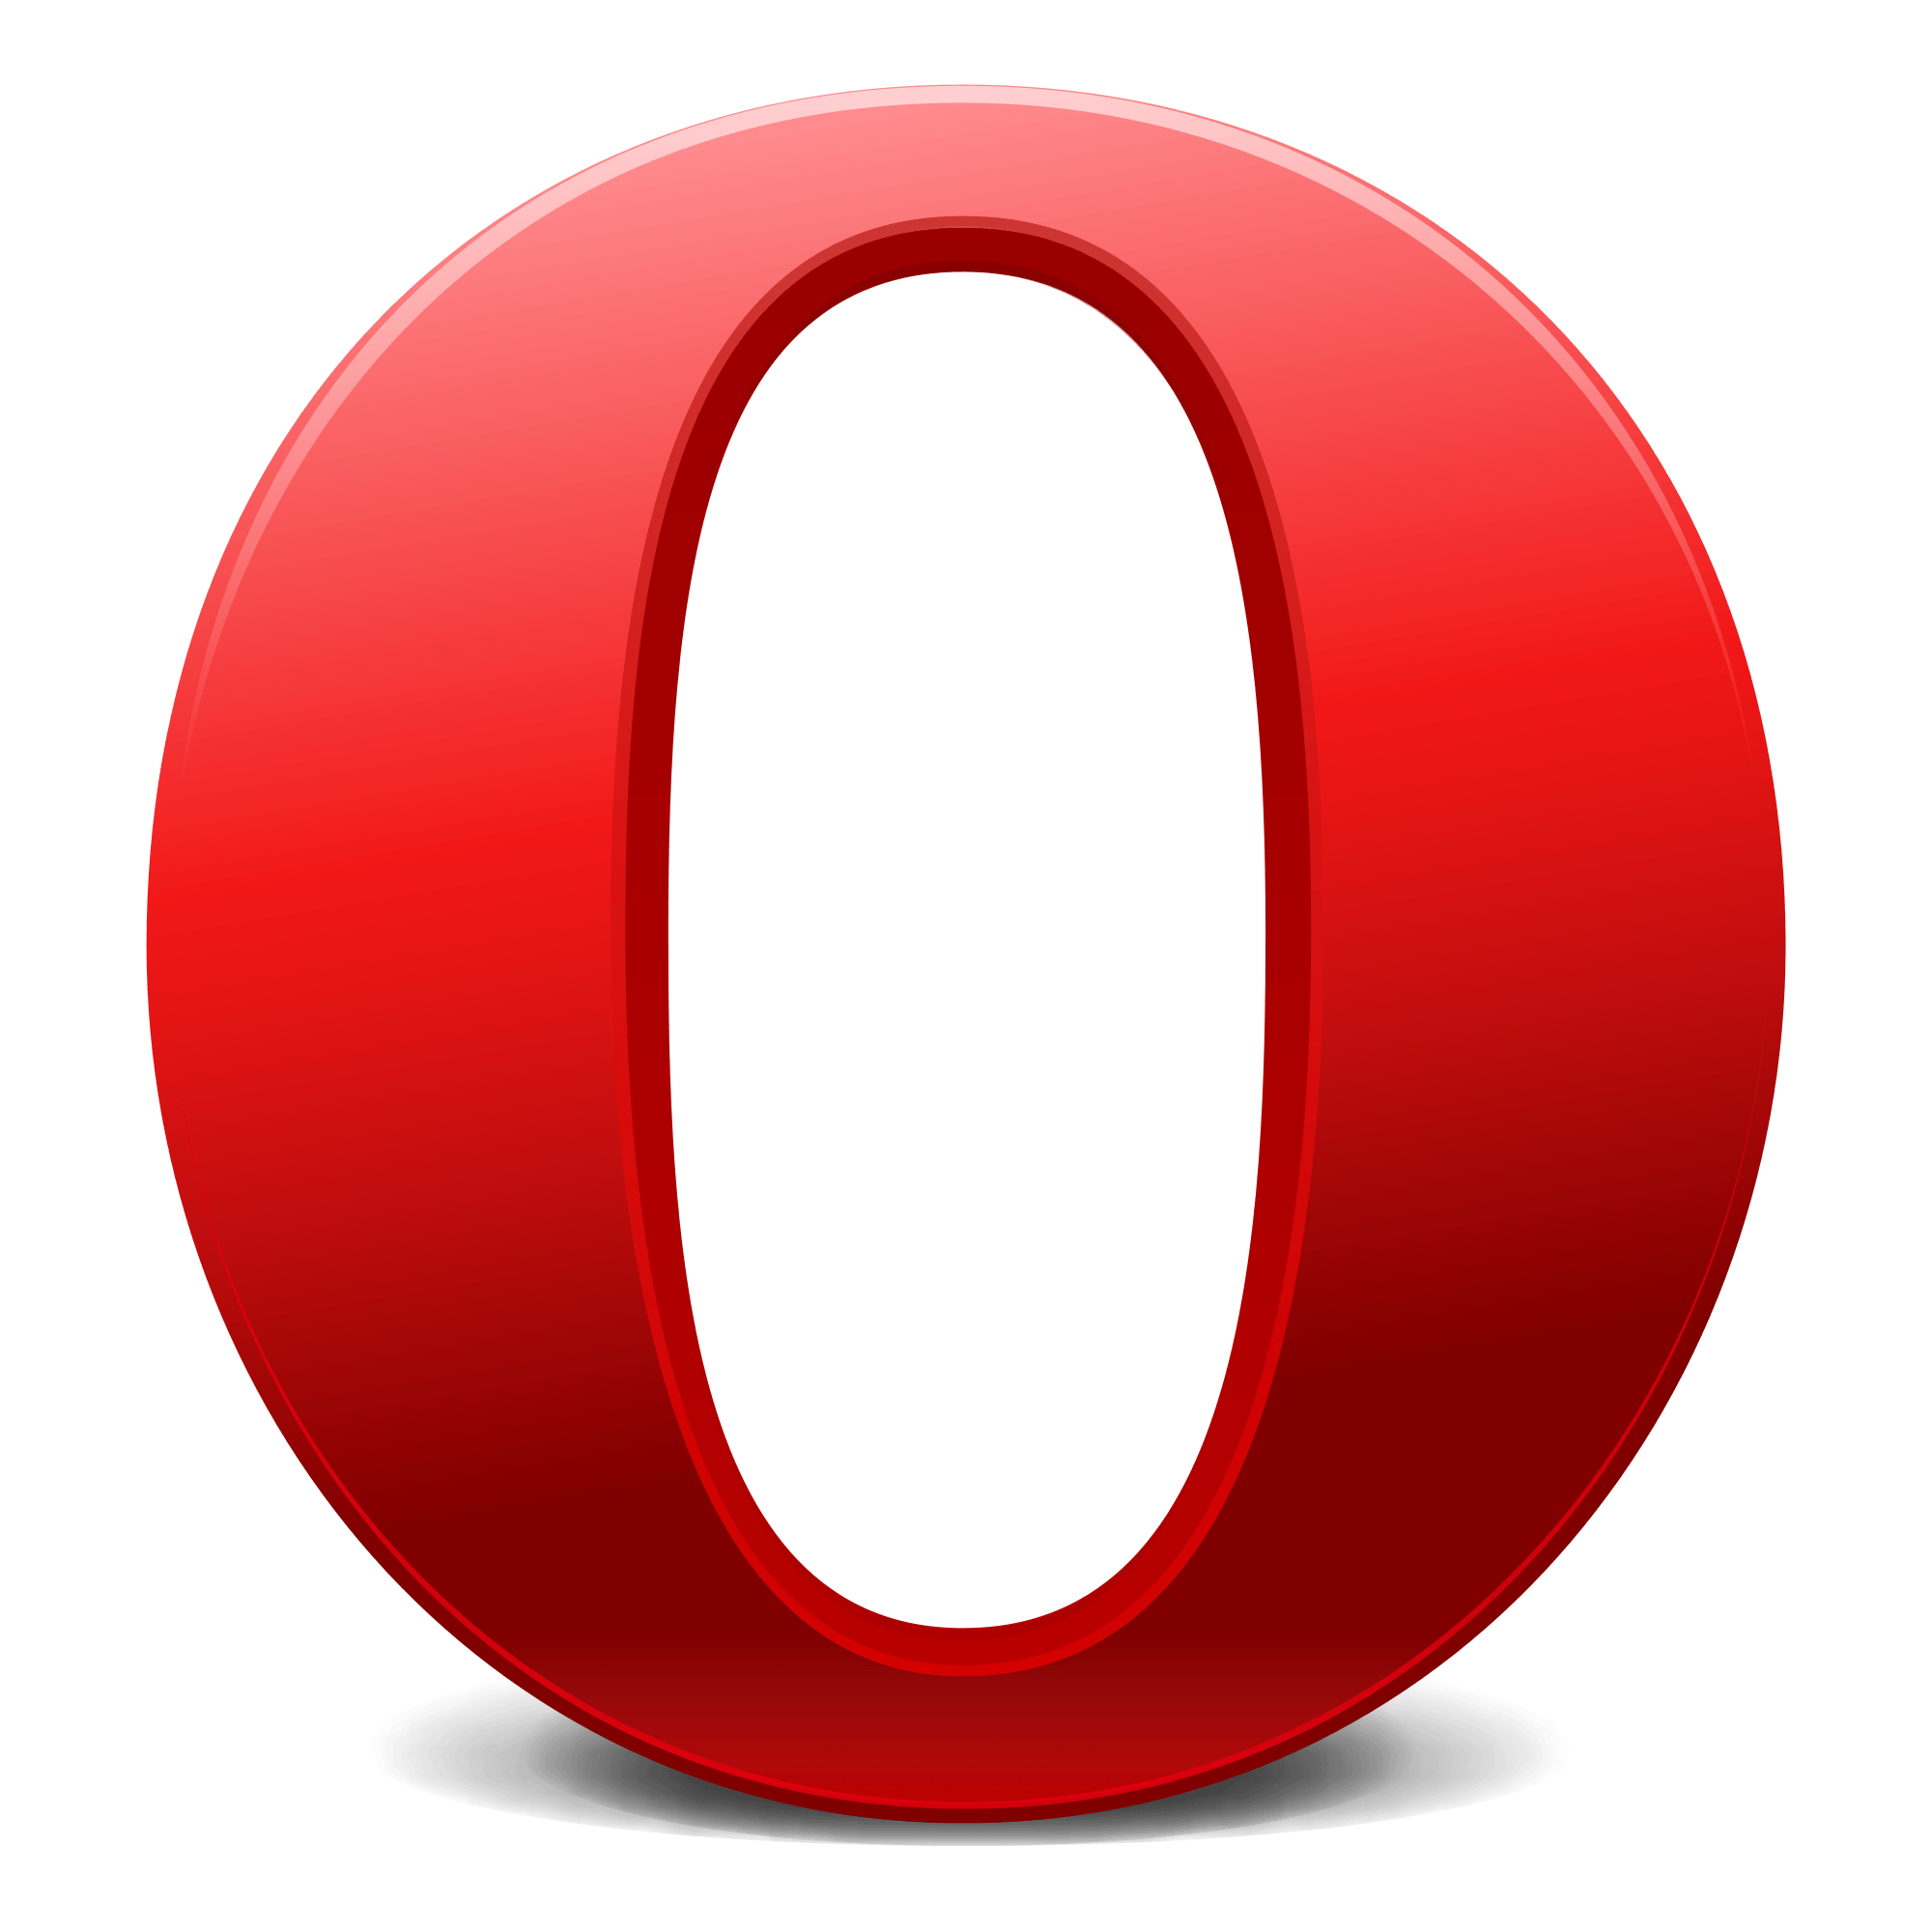 Opera Logo - Image - Opera-logo.png | Patapon Fan Fiction Wiki | FANDOM powered ...